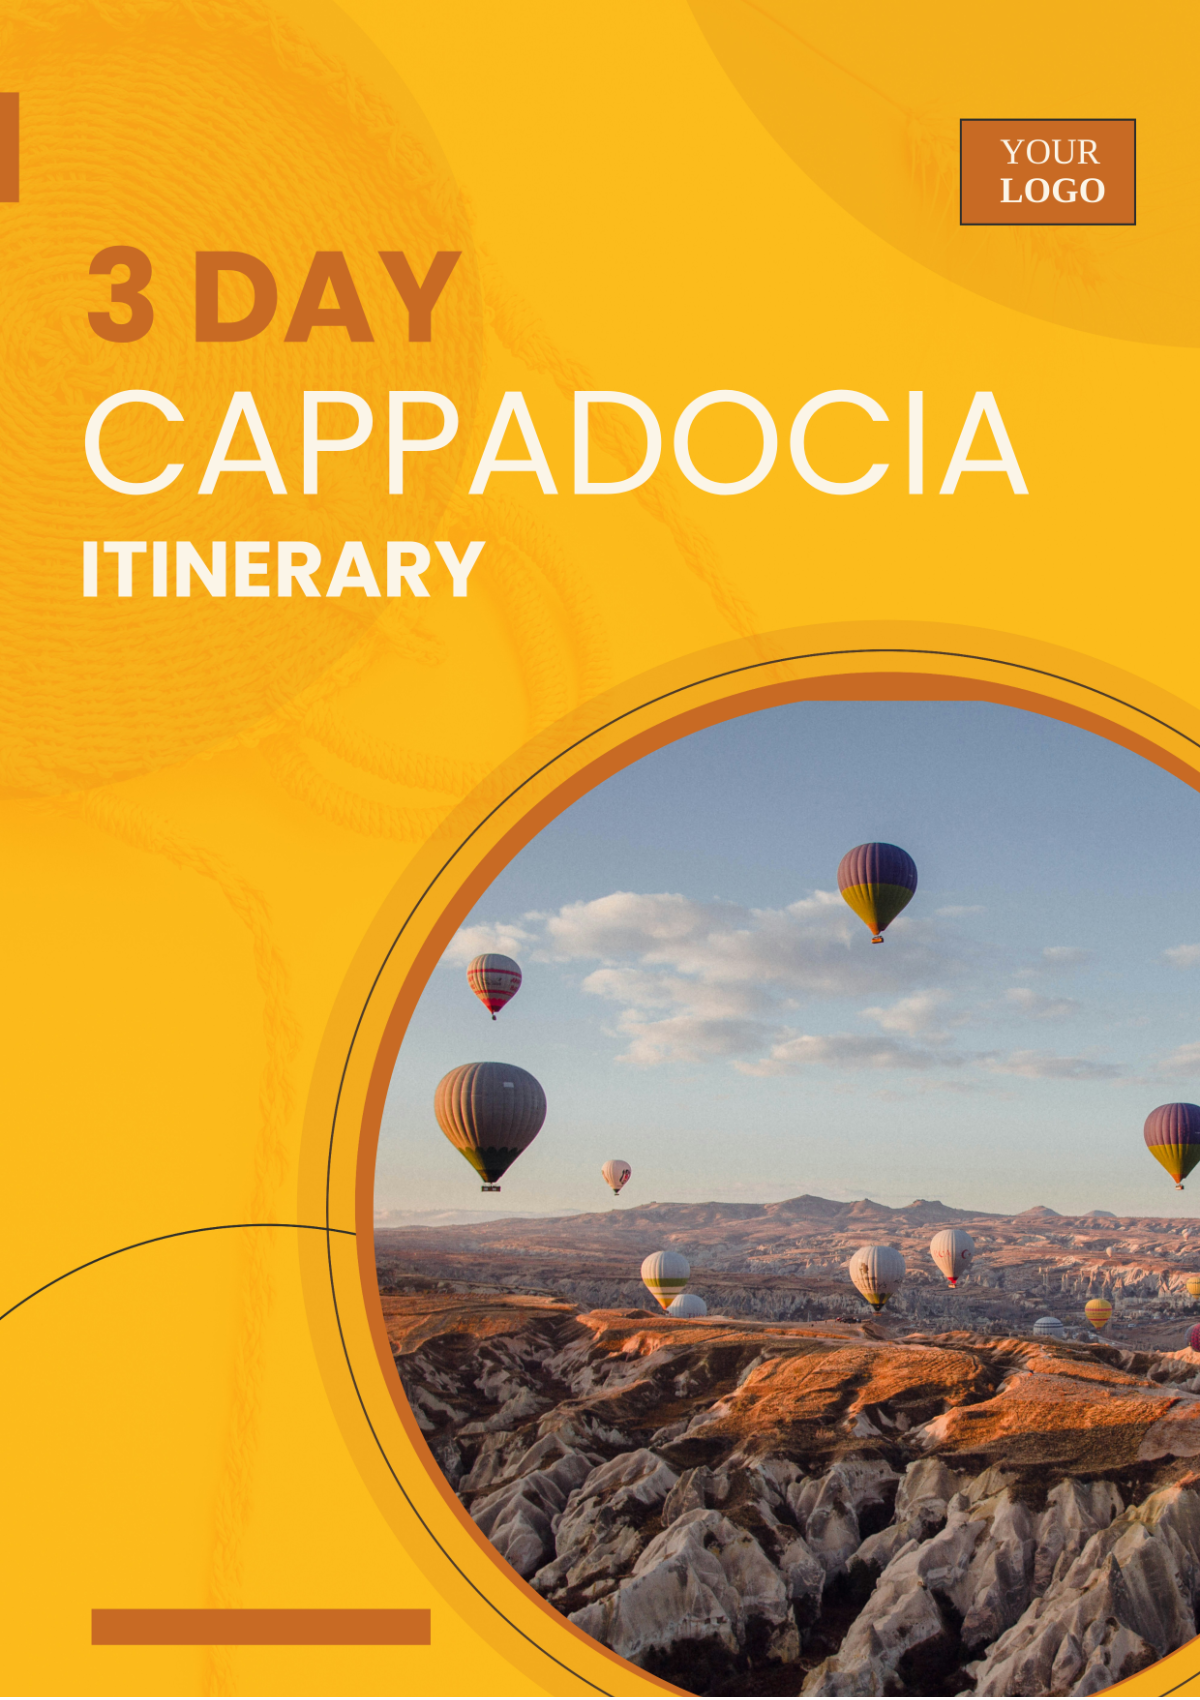 Free 3 Day Cappadocia Itinerary Template